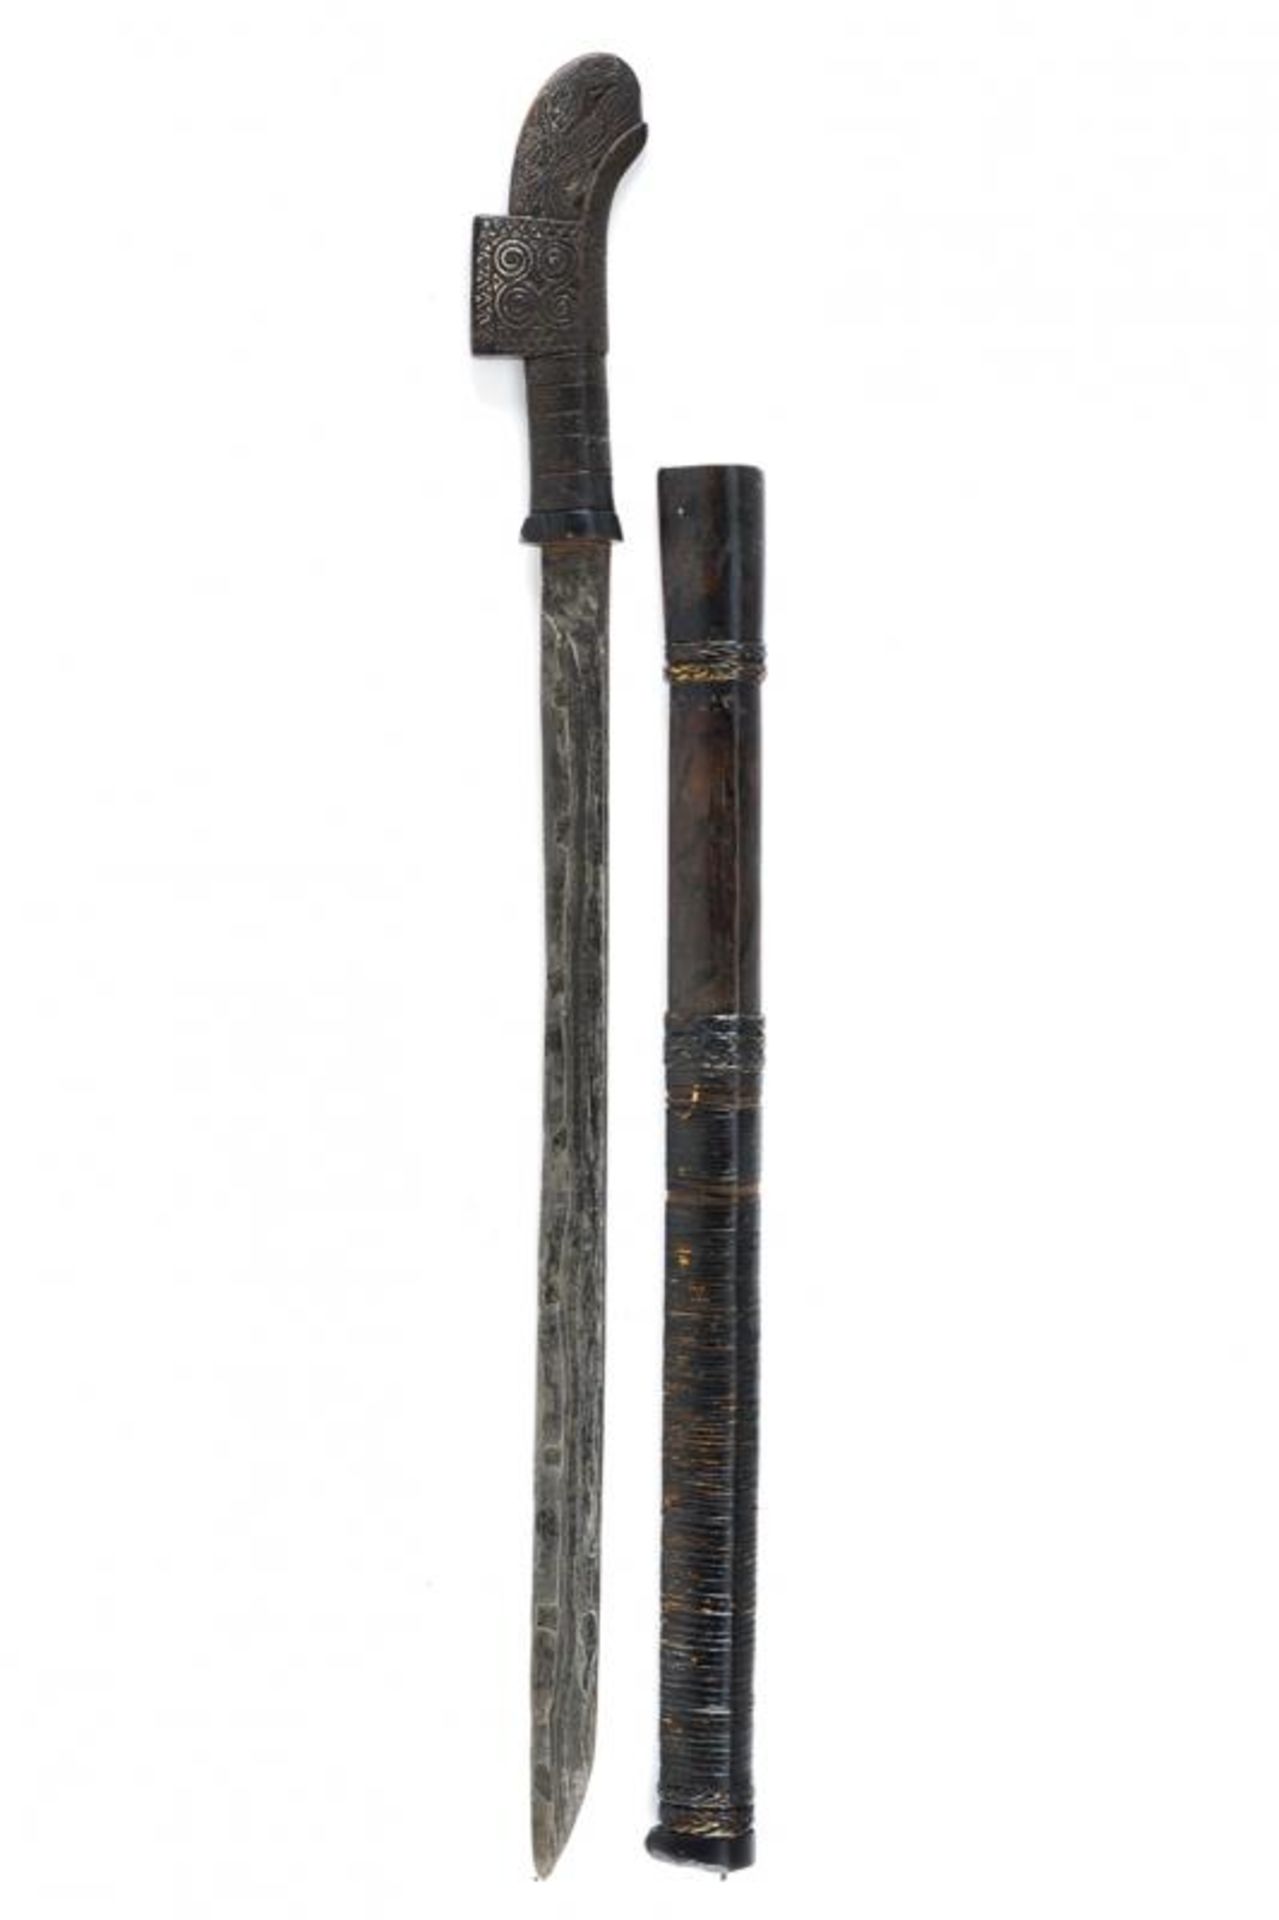 A La-bo (sword) of the Toraja people